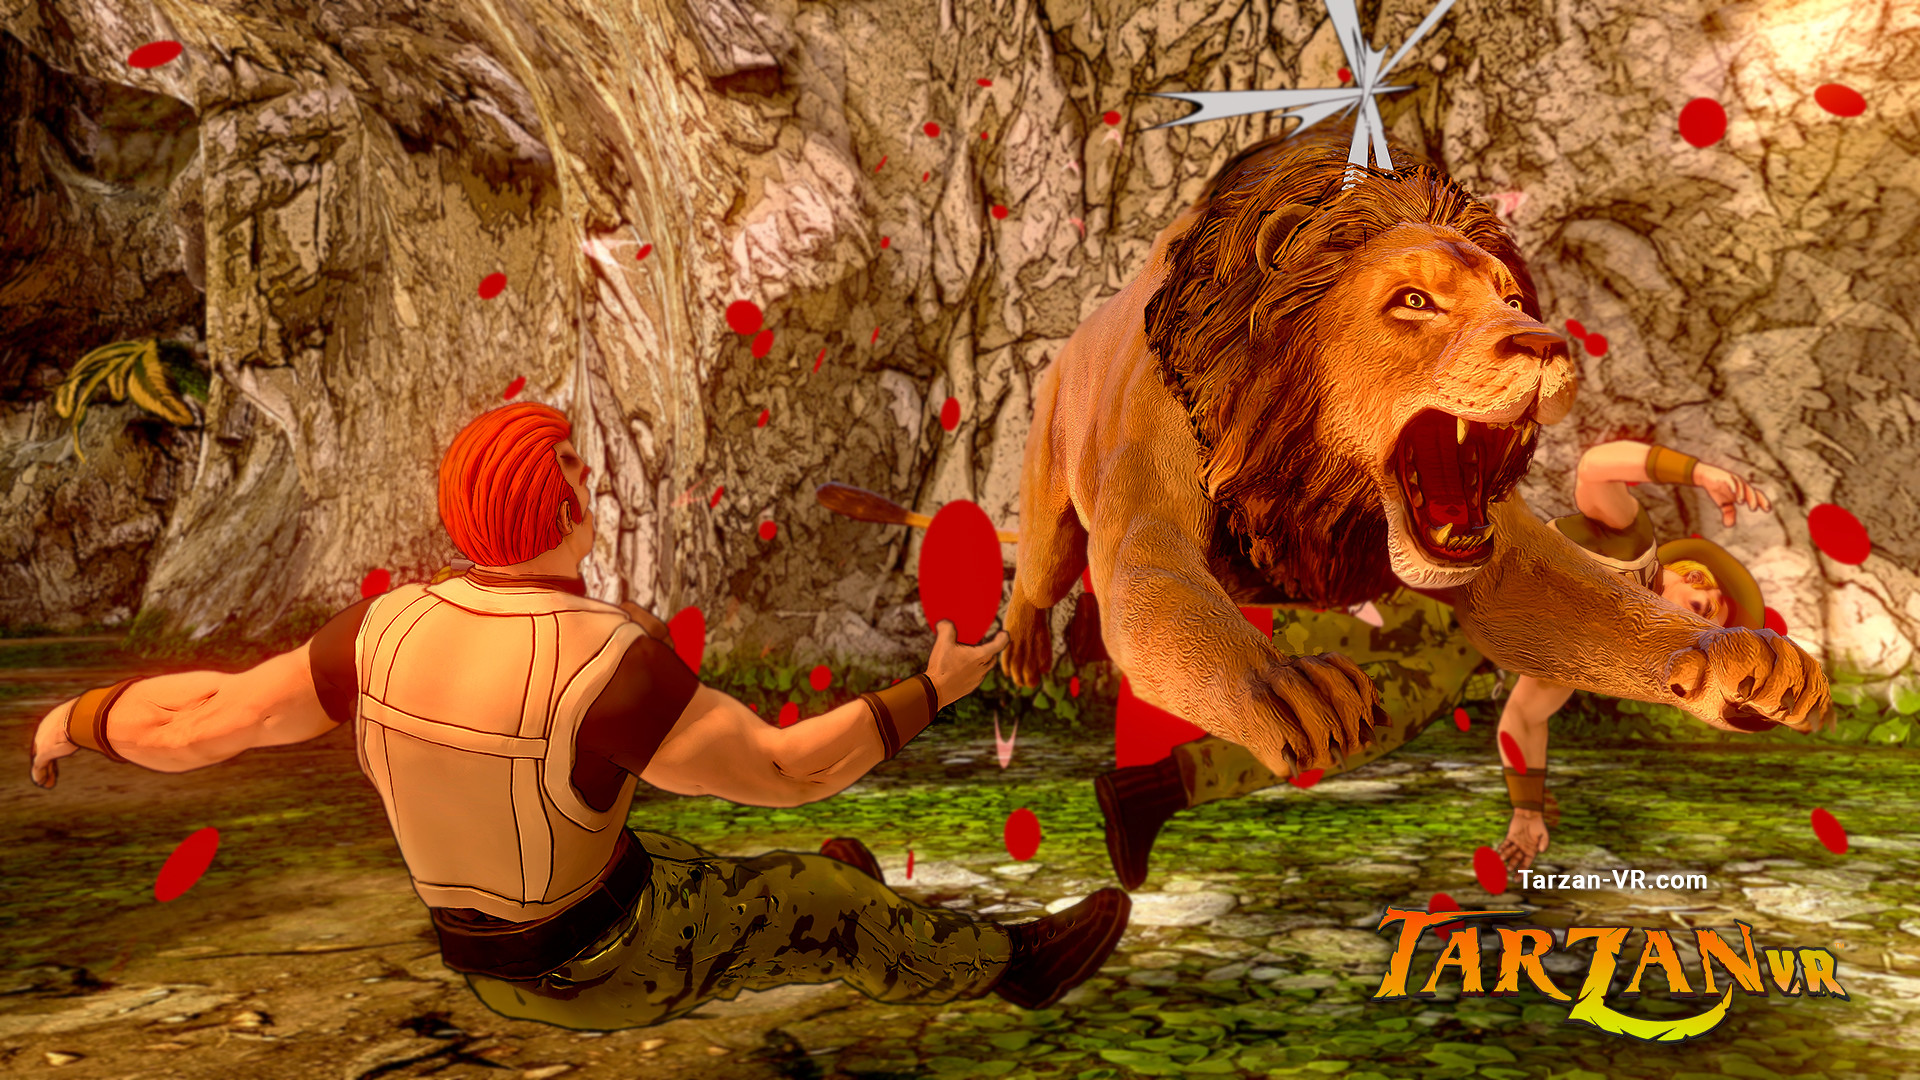 Tarzan VR,  Issue #2 - THE JAGGED EDGE Featured Screenshot #1